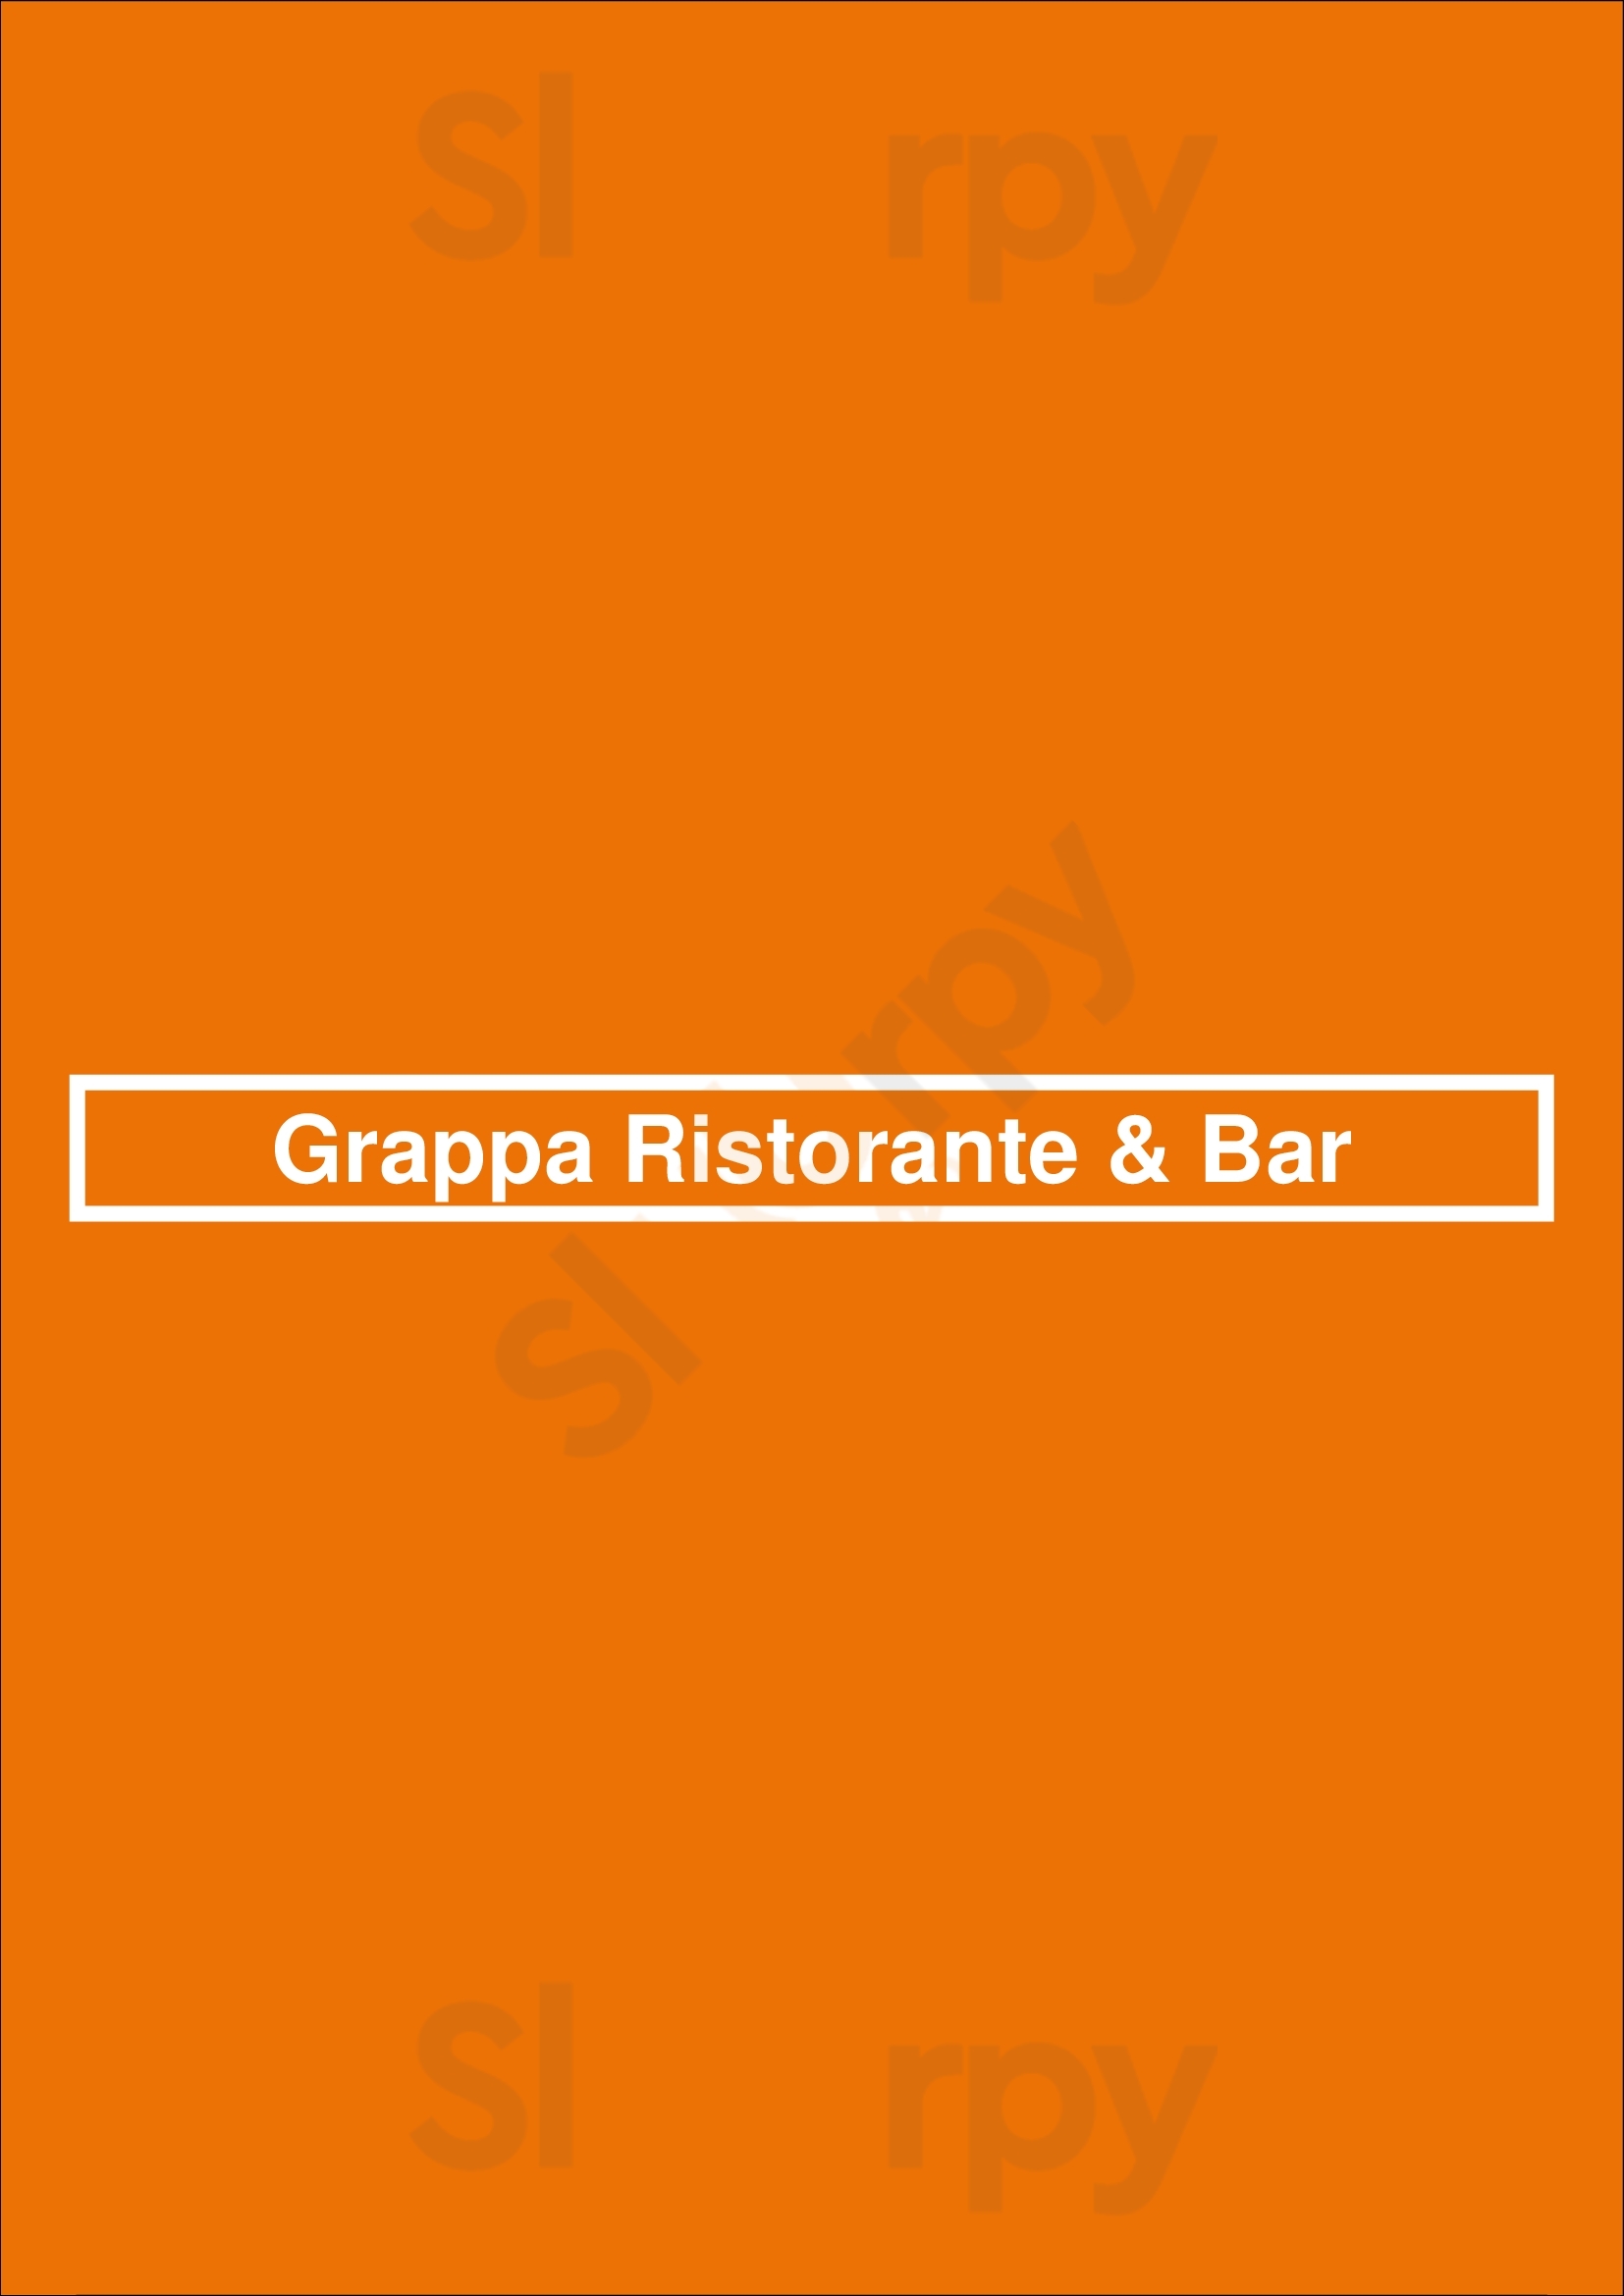 Grappa Ristorante & Bar Leichhardt Menu - 1